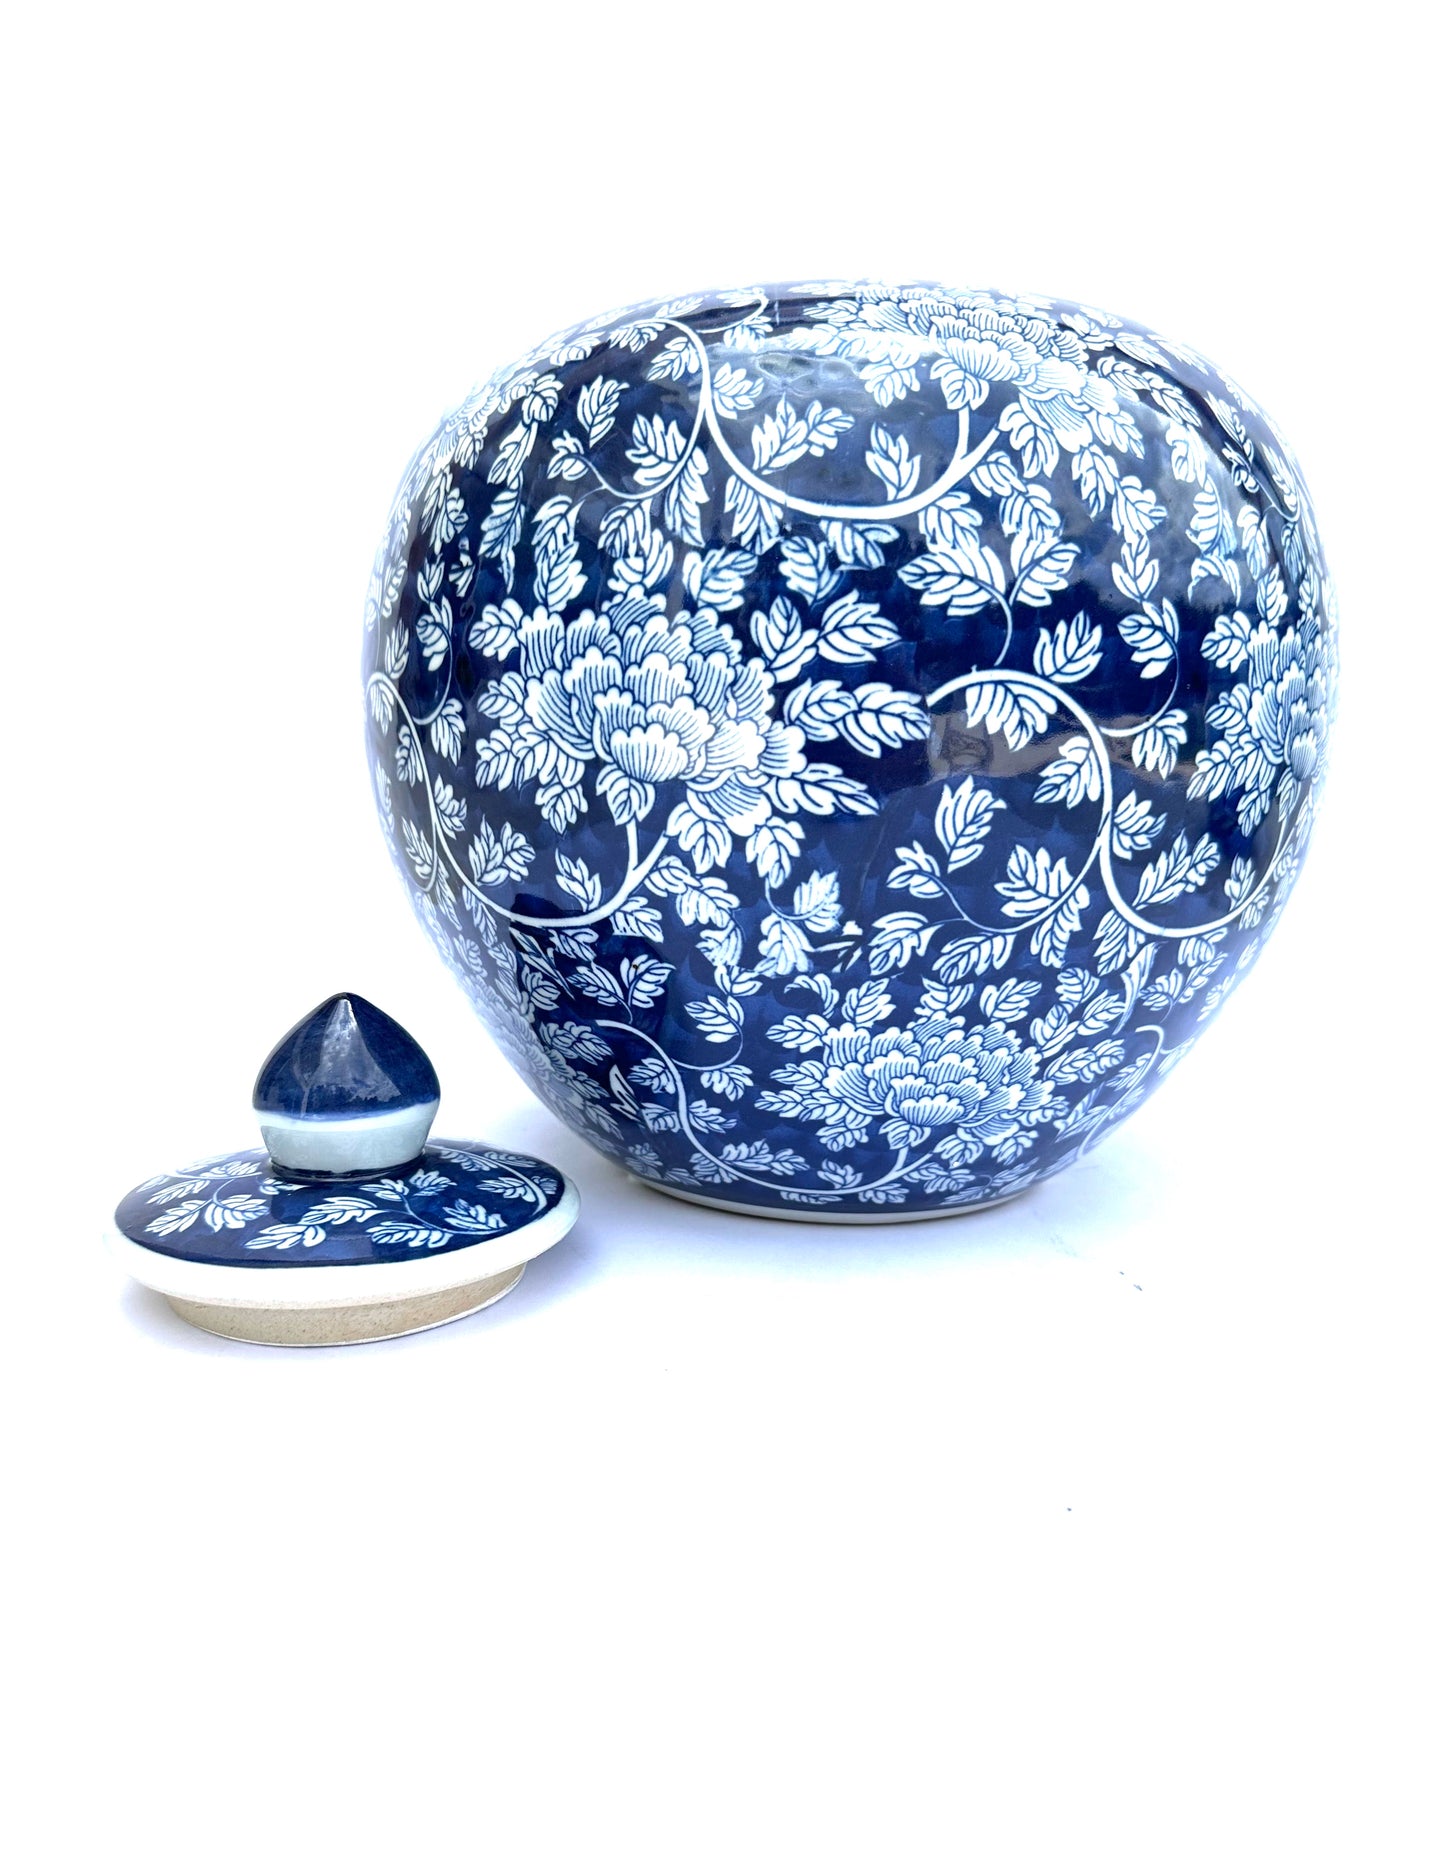 Deep Blue and white Porcelain ball